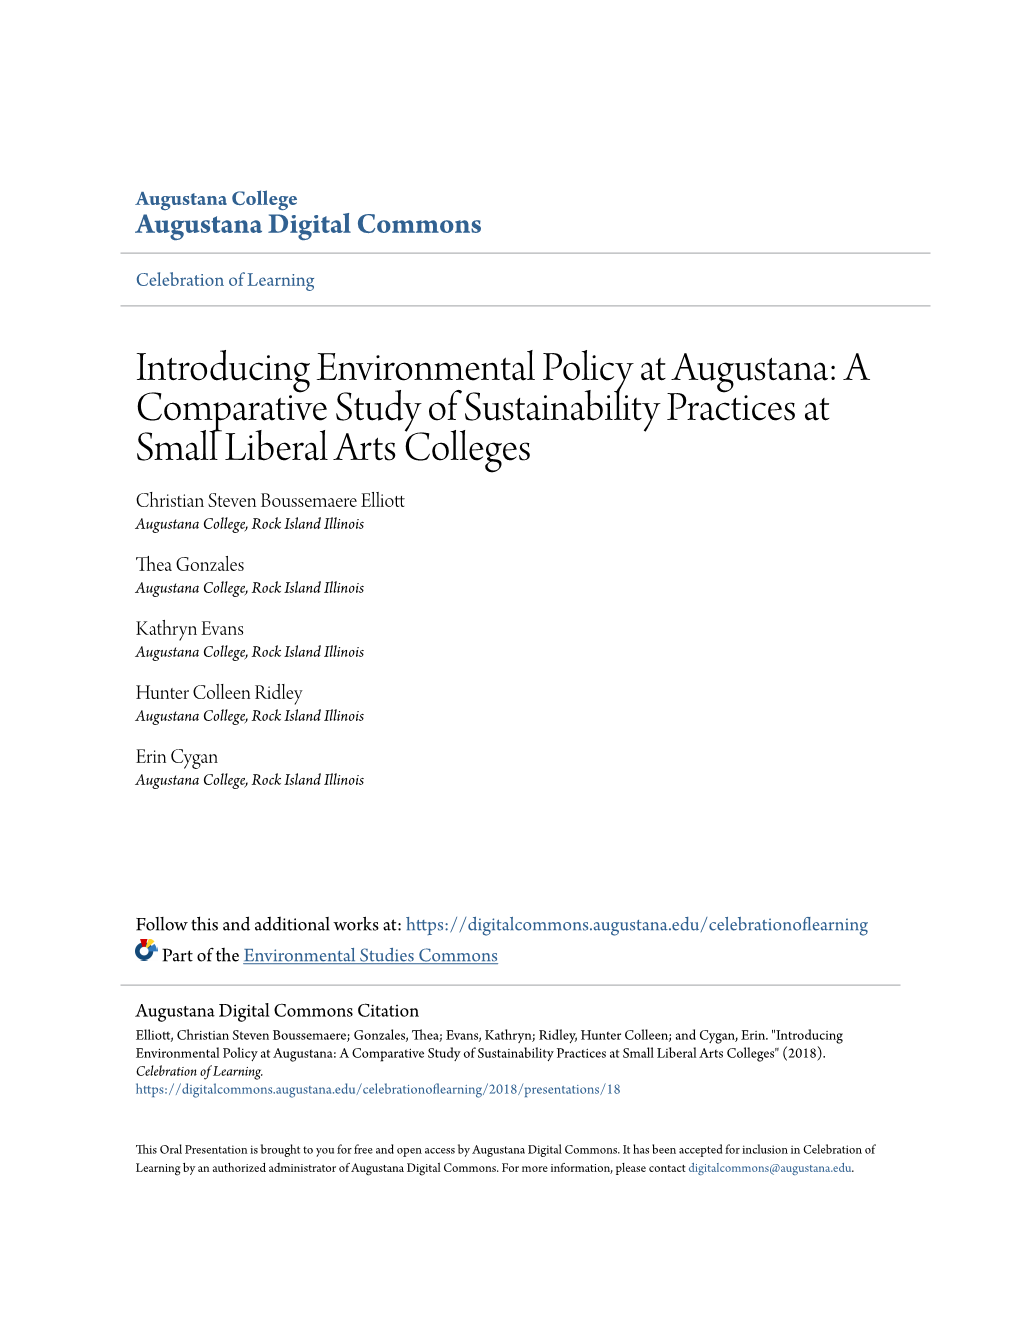 Introducing Environmental Policy at Augustana